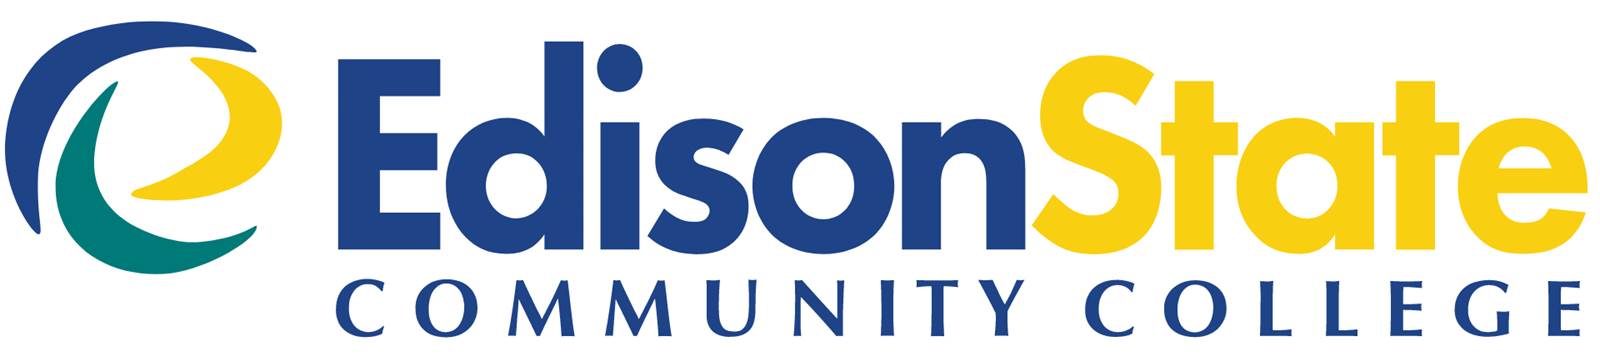 Edison State Community College Slide Image